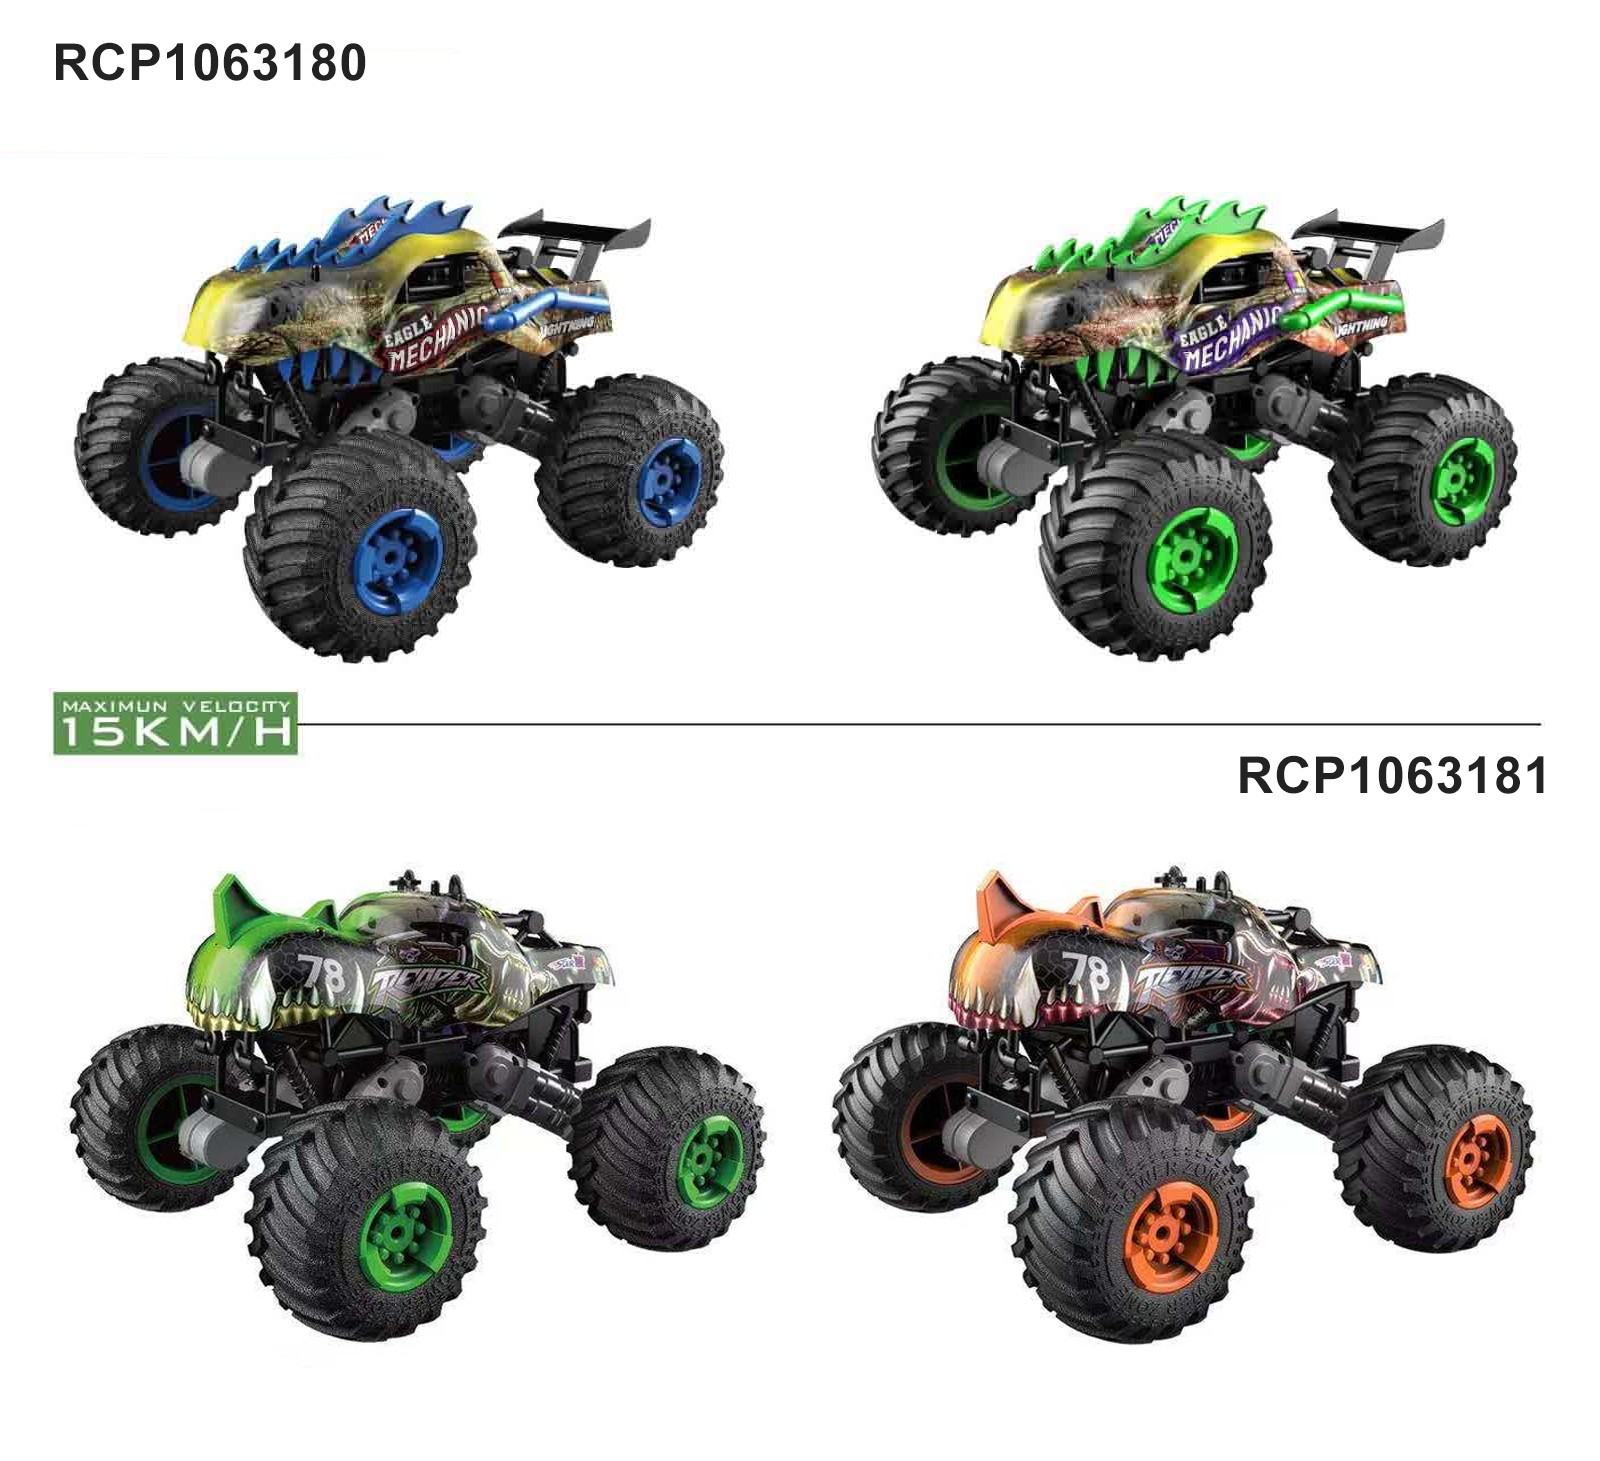 PAK TAT monster truck rc toys manufacturers